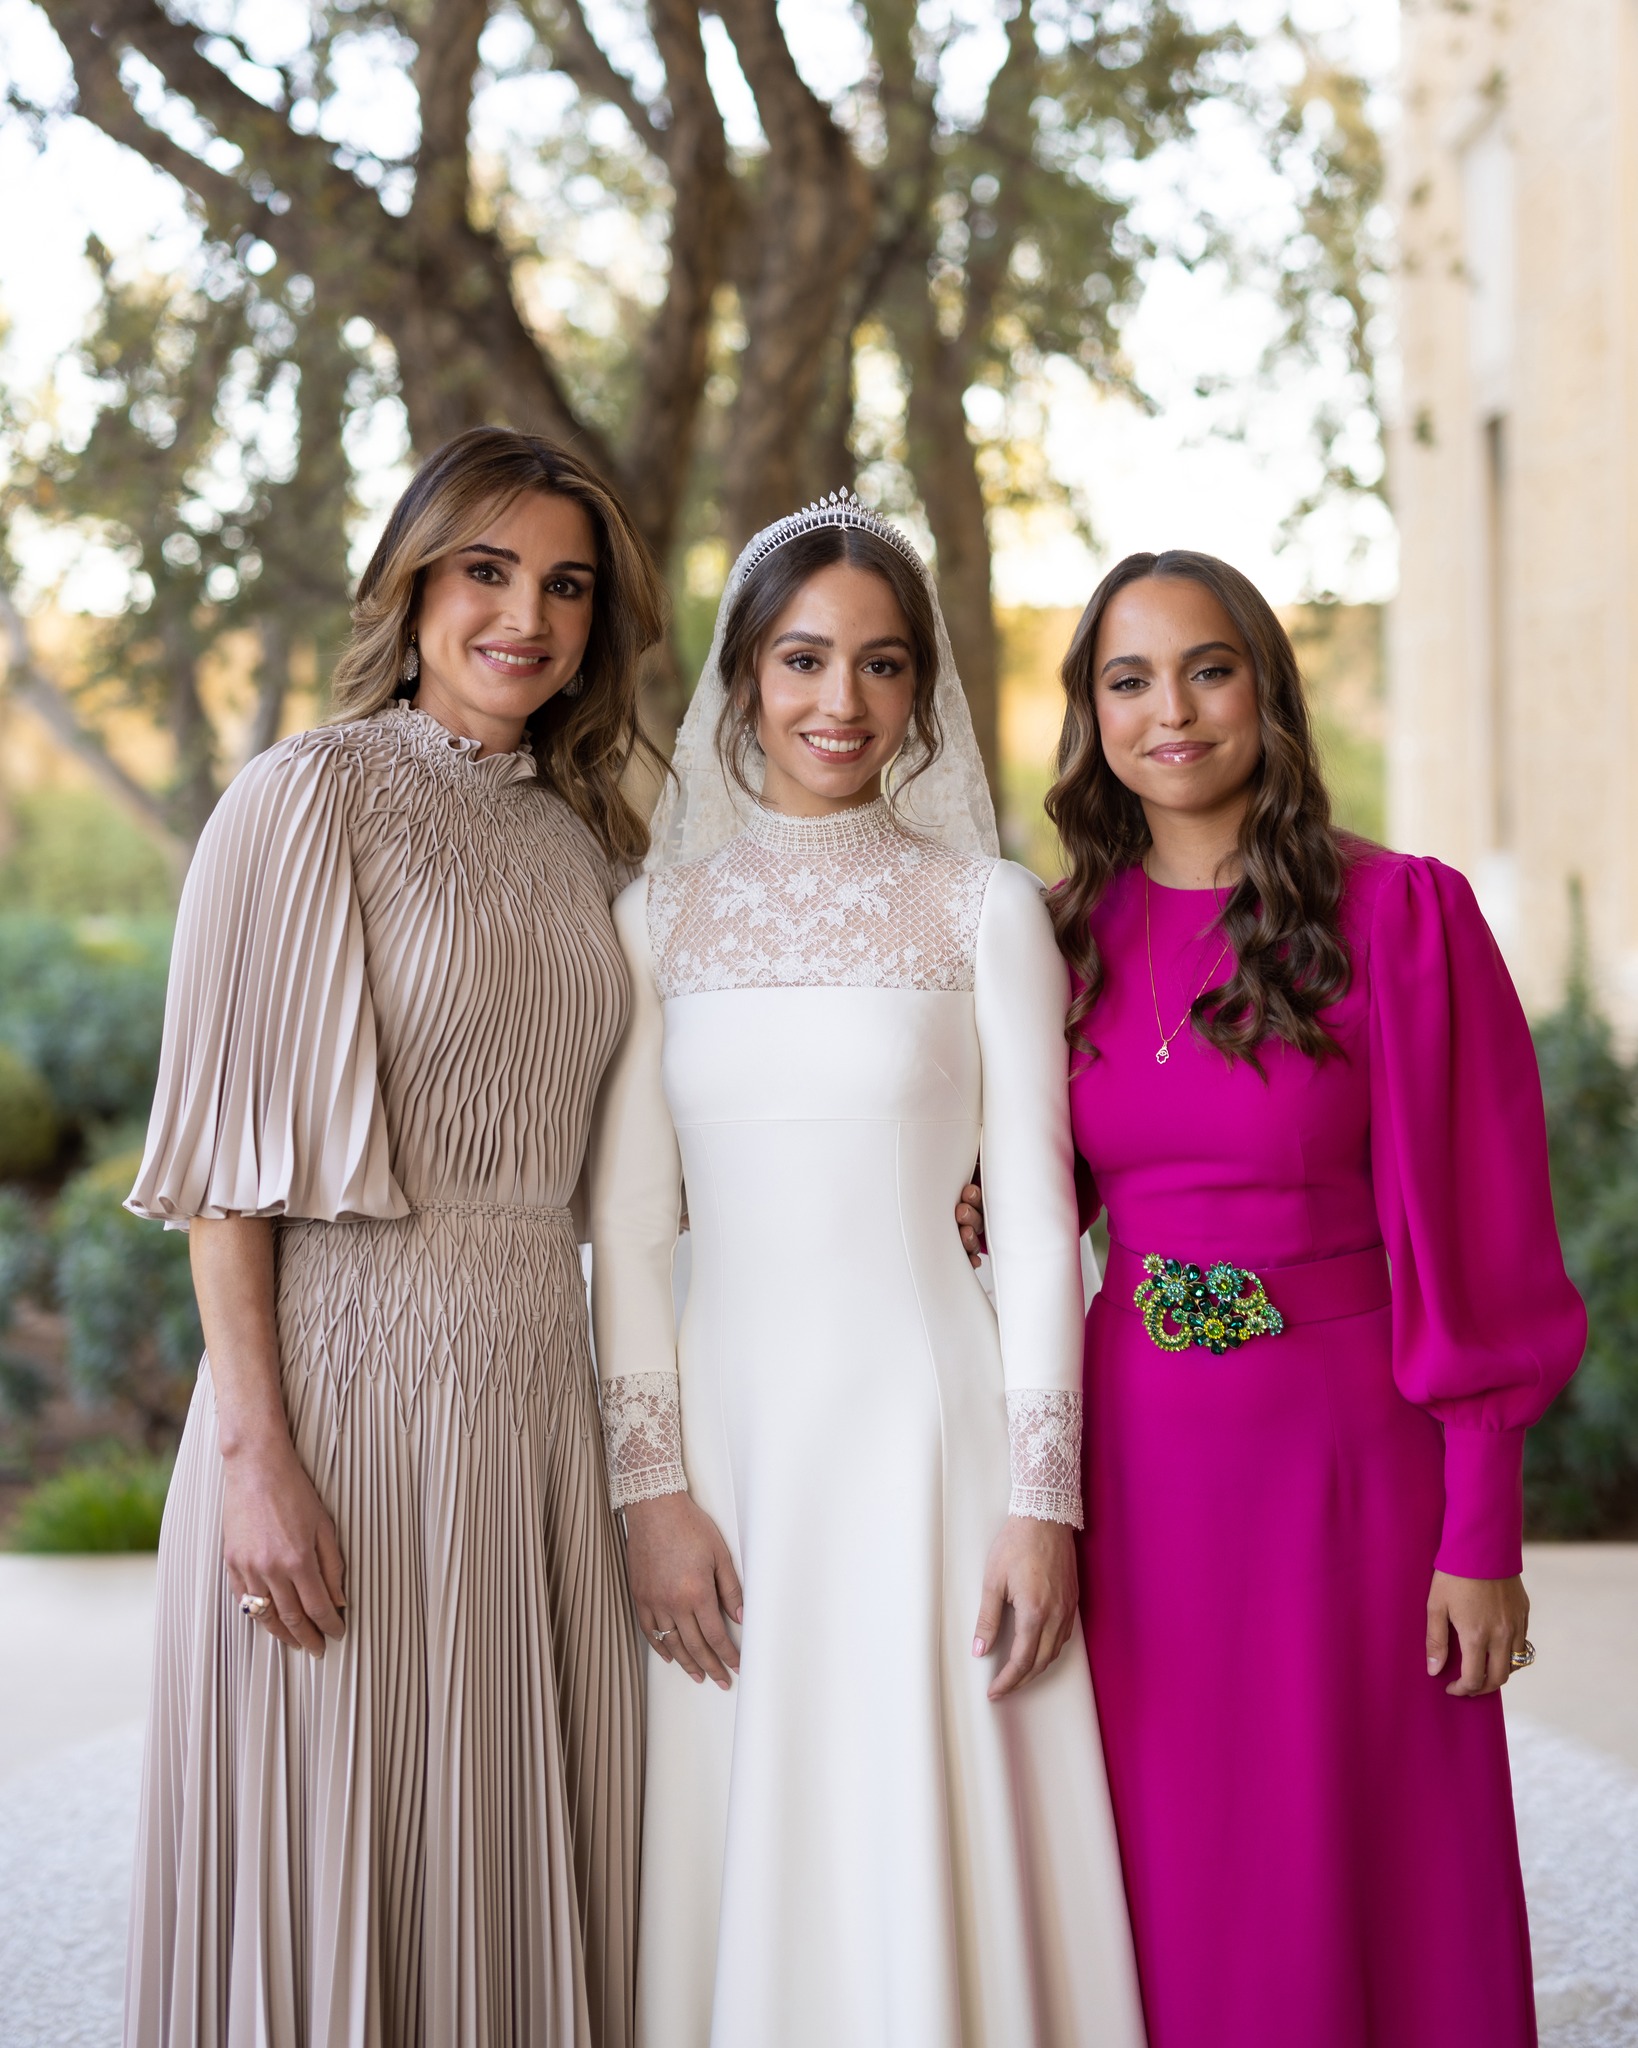 Princess Iman with Queen Rania and Princess Salma on her wedding day